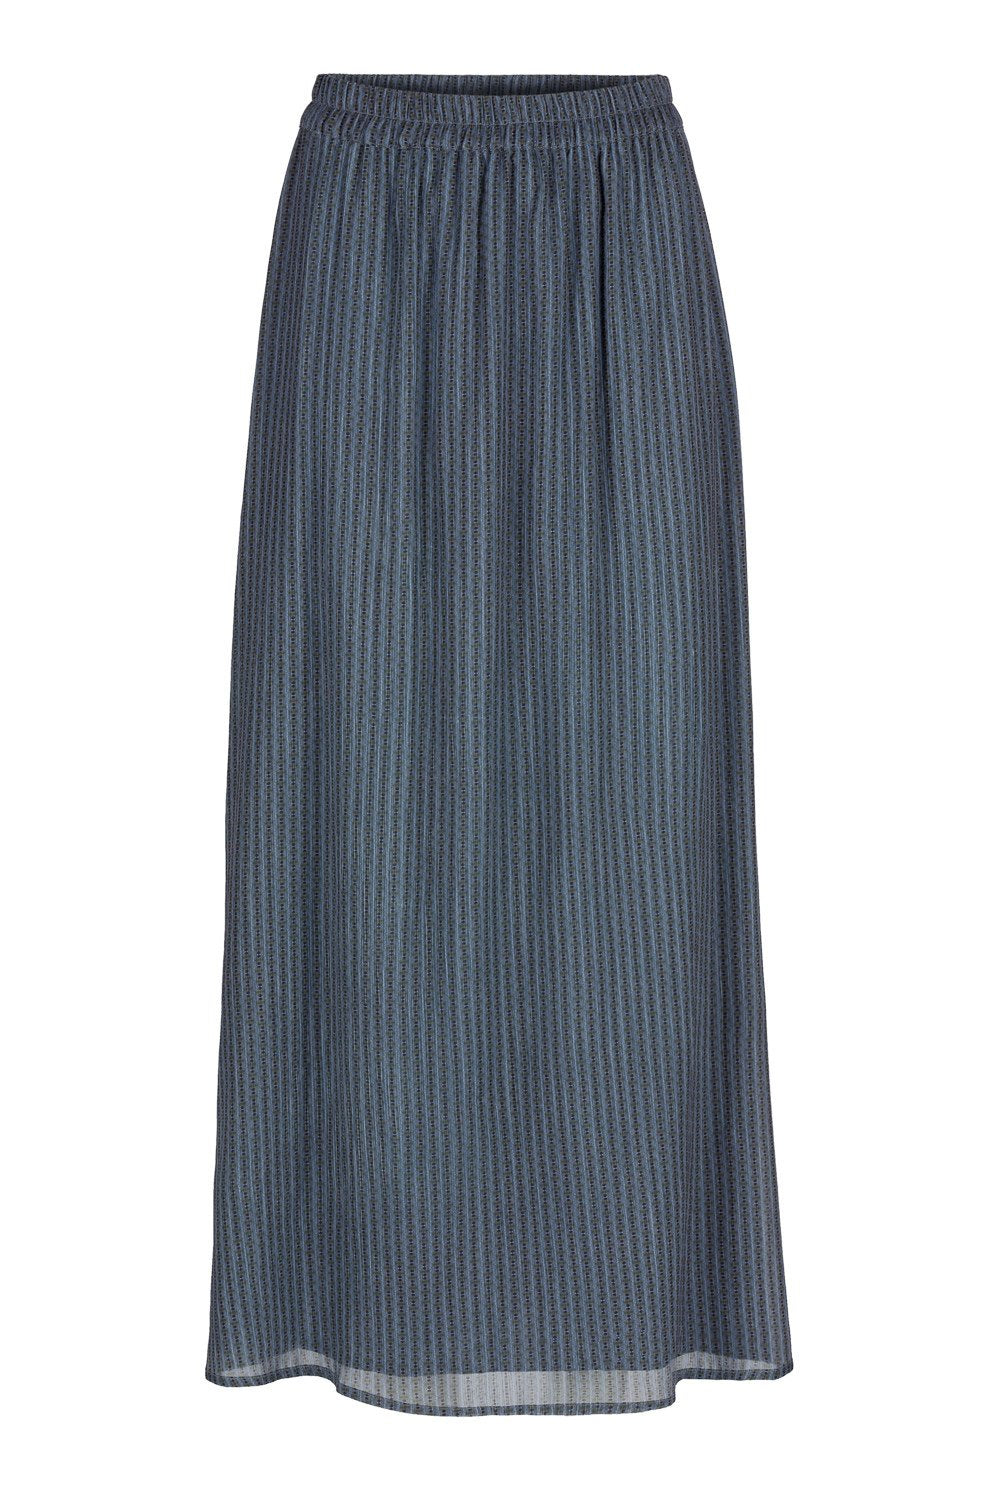 By-Bar - pleun dotted skirt smoke blue